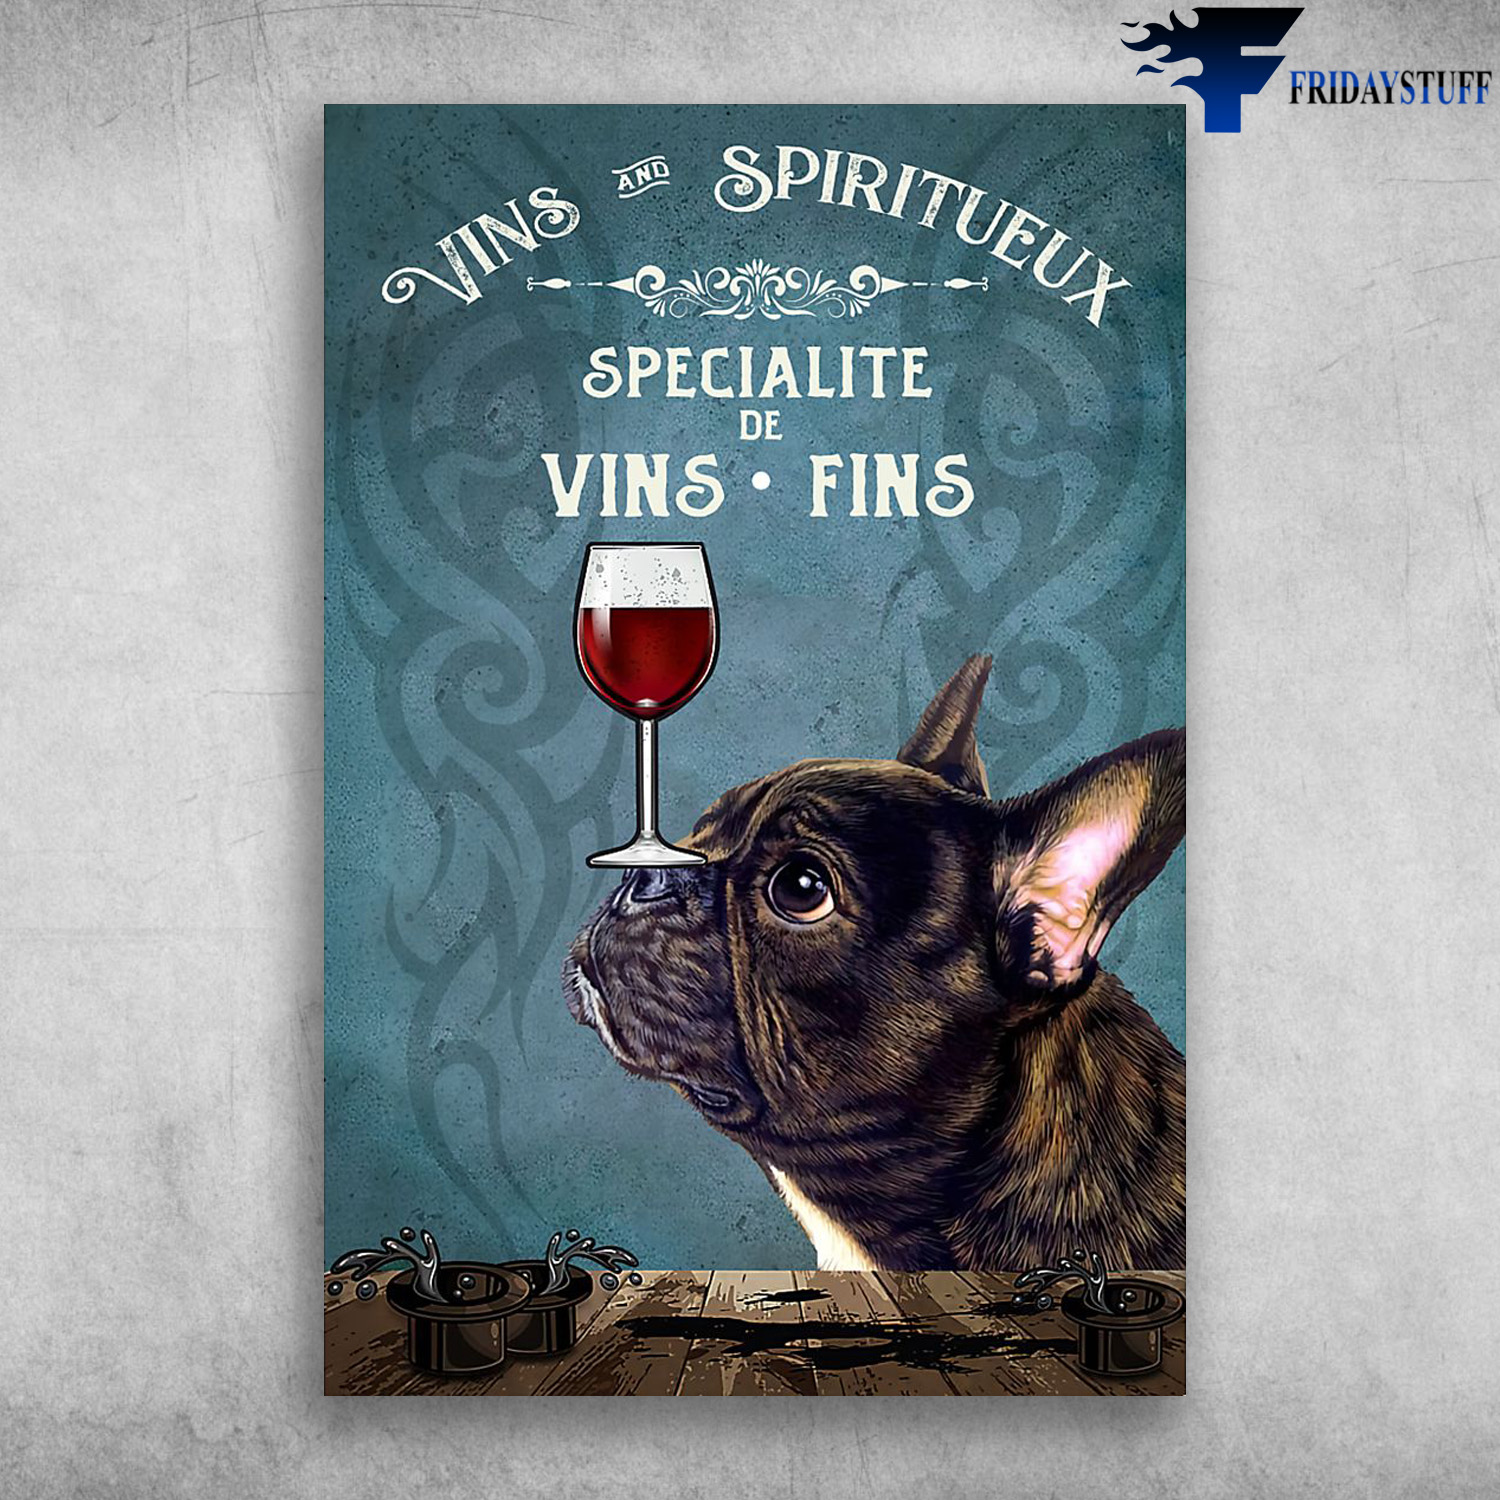 French Bulldog - Vins And Spiritueus, Specialite De Vins-Fins, Red Wine